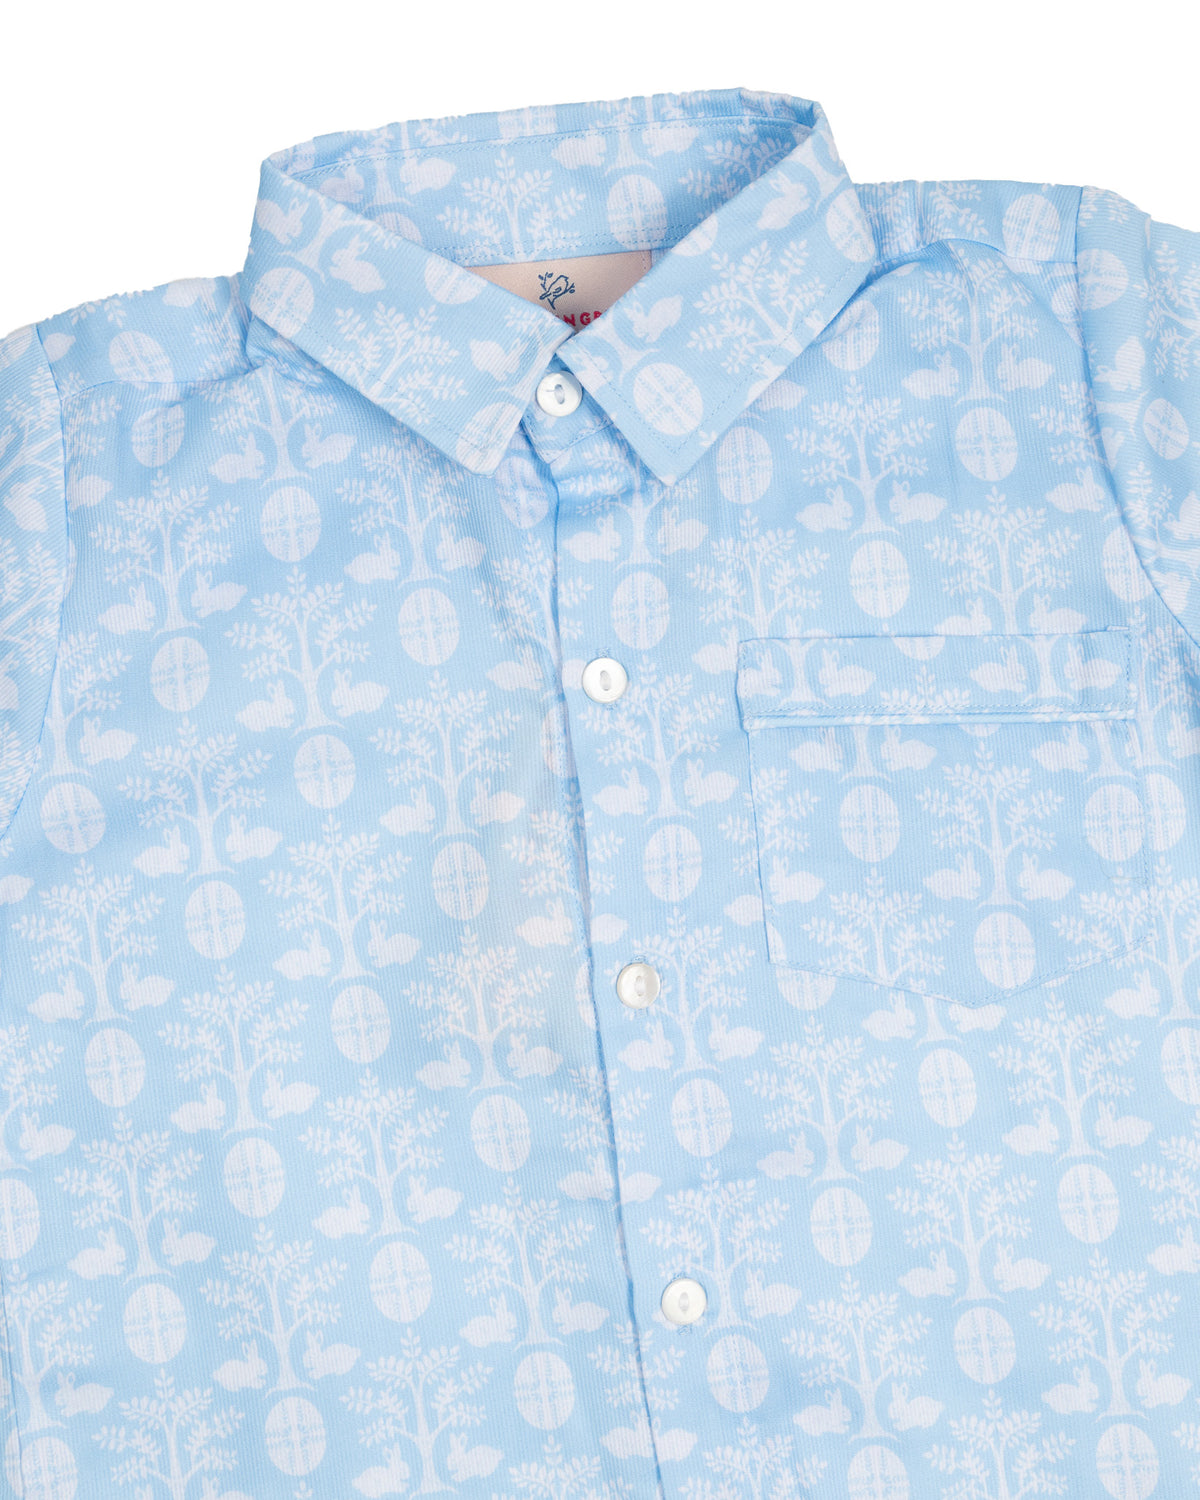 Blue Bunny Button Down Shirt-FINAL SALE